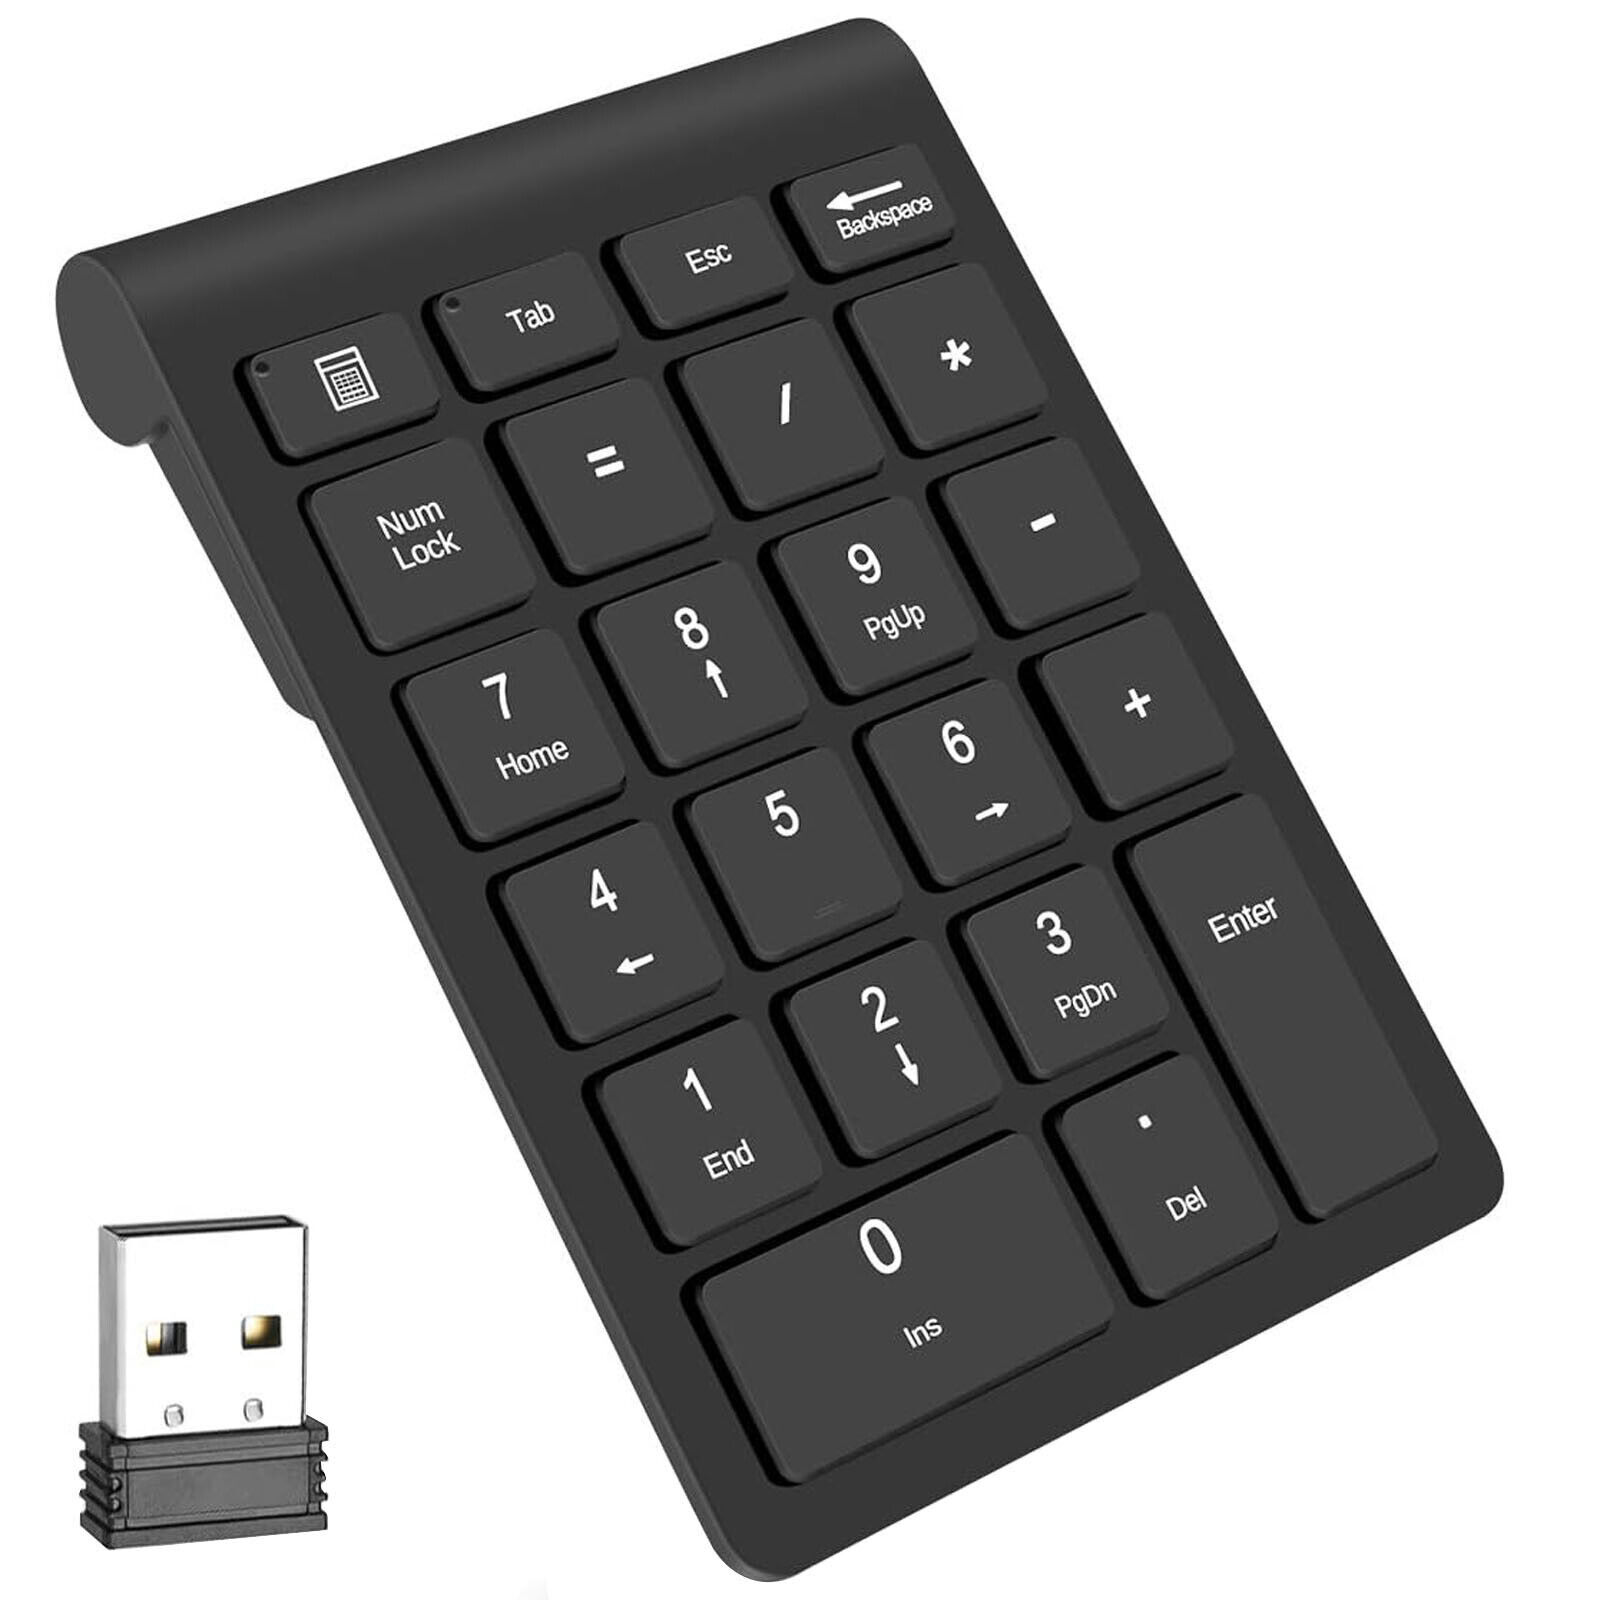 ABS Portable 22 Keys 2.4G Wireless Number Pad Numeric Keypad for Laptop Desktop